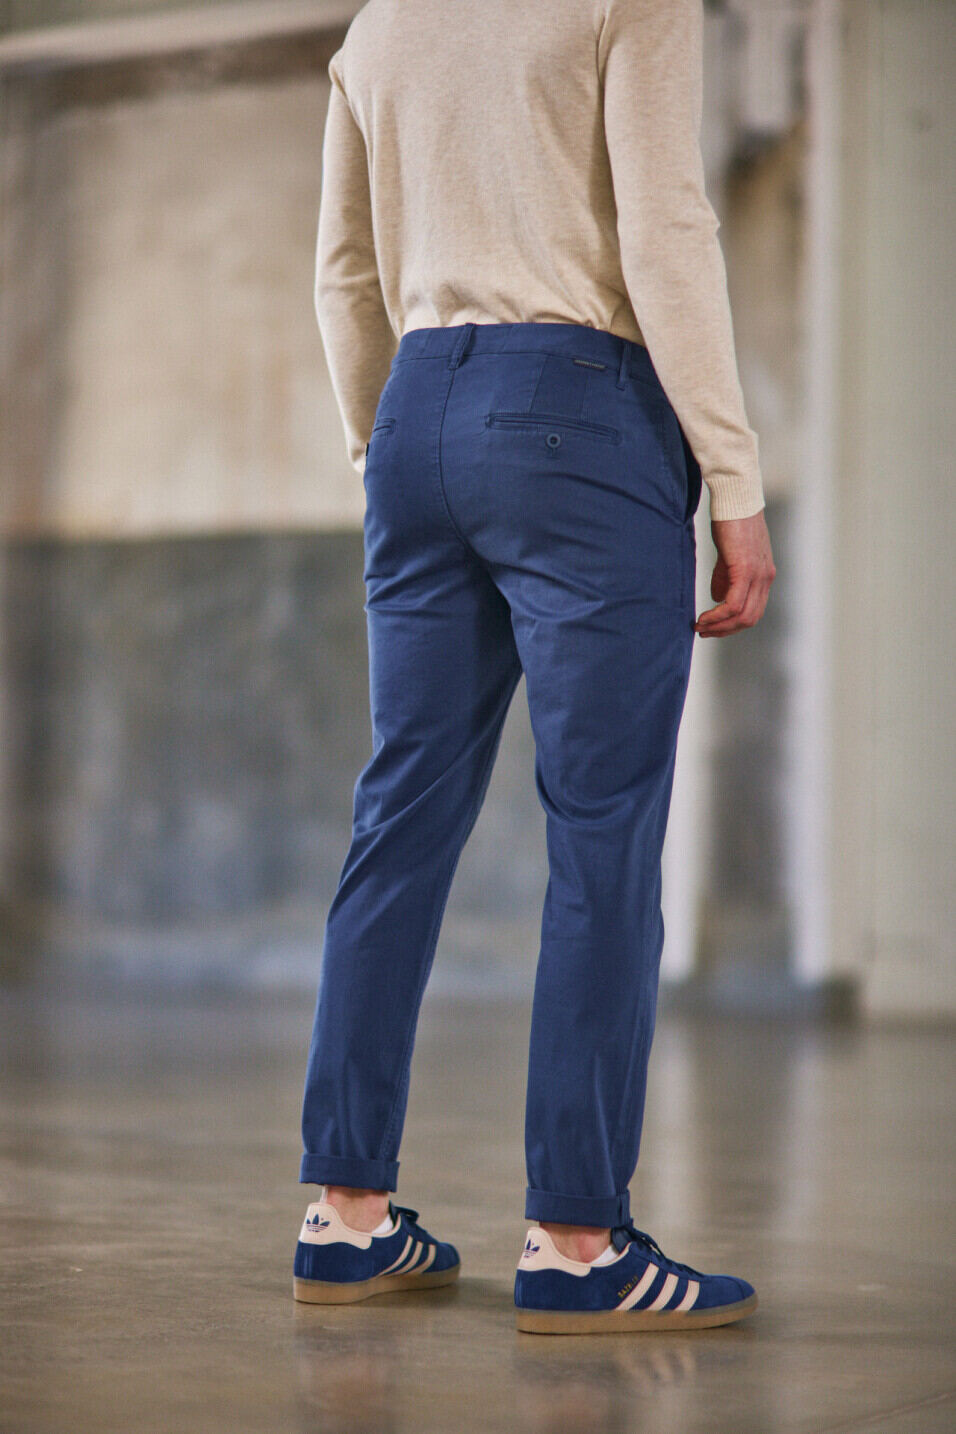 Pantalon chino Homme Mathis Bonito Naval blue | Freeman T. Porter